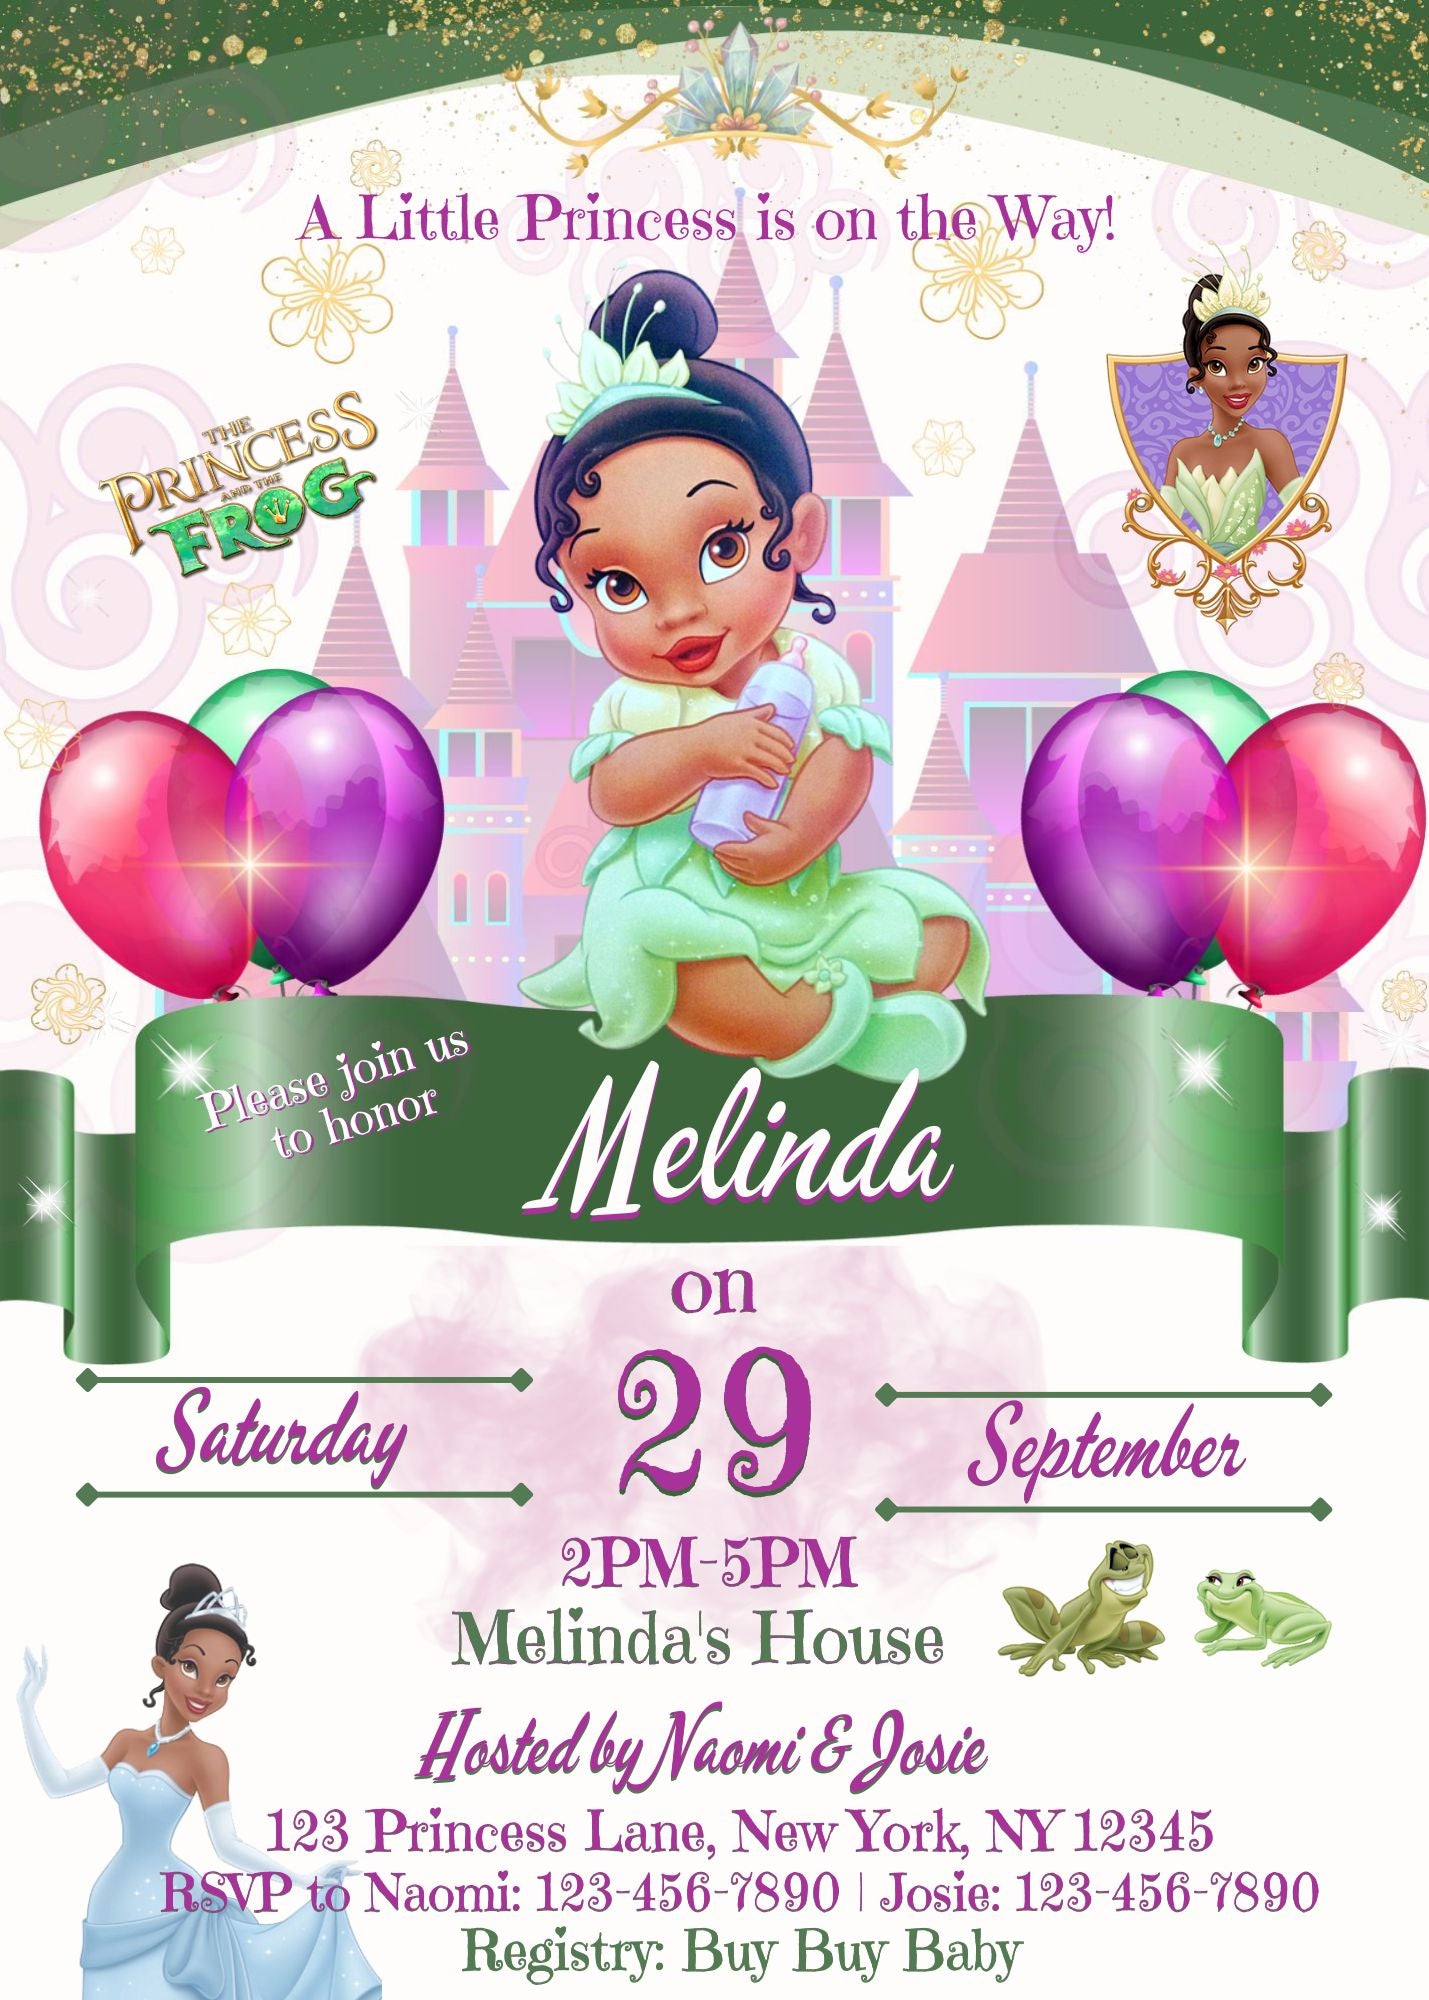 Editable Princess Tiana Baby Shower Invitation | Princess and the Frog Baby Shower Invitation | Princess Invitation | Baby Tiana Shower